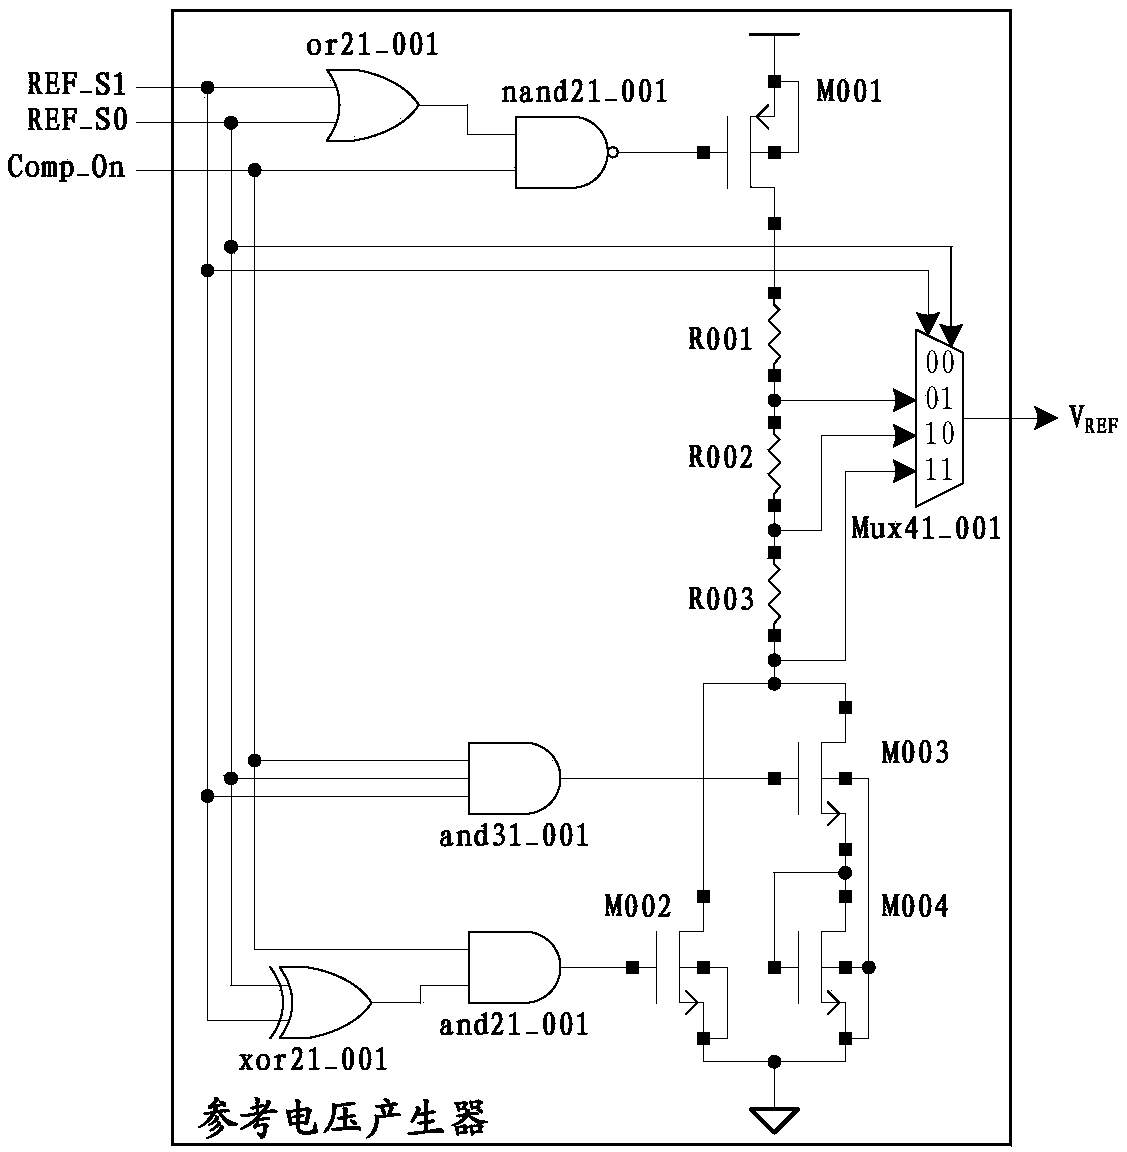 Analog voltage comparator